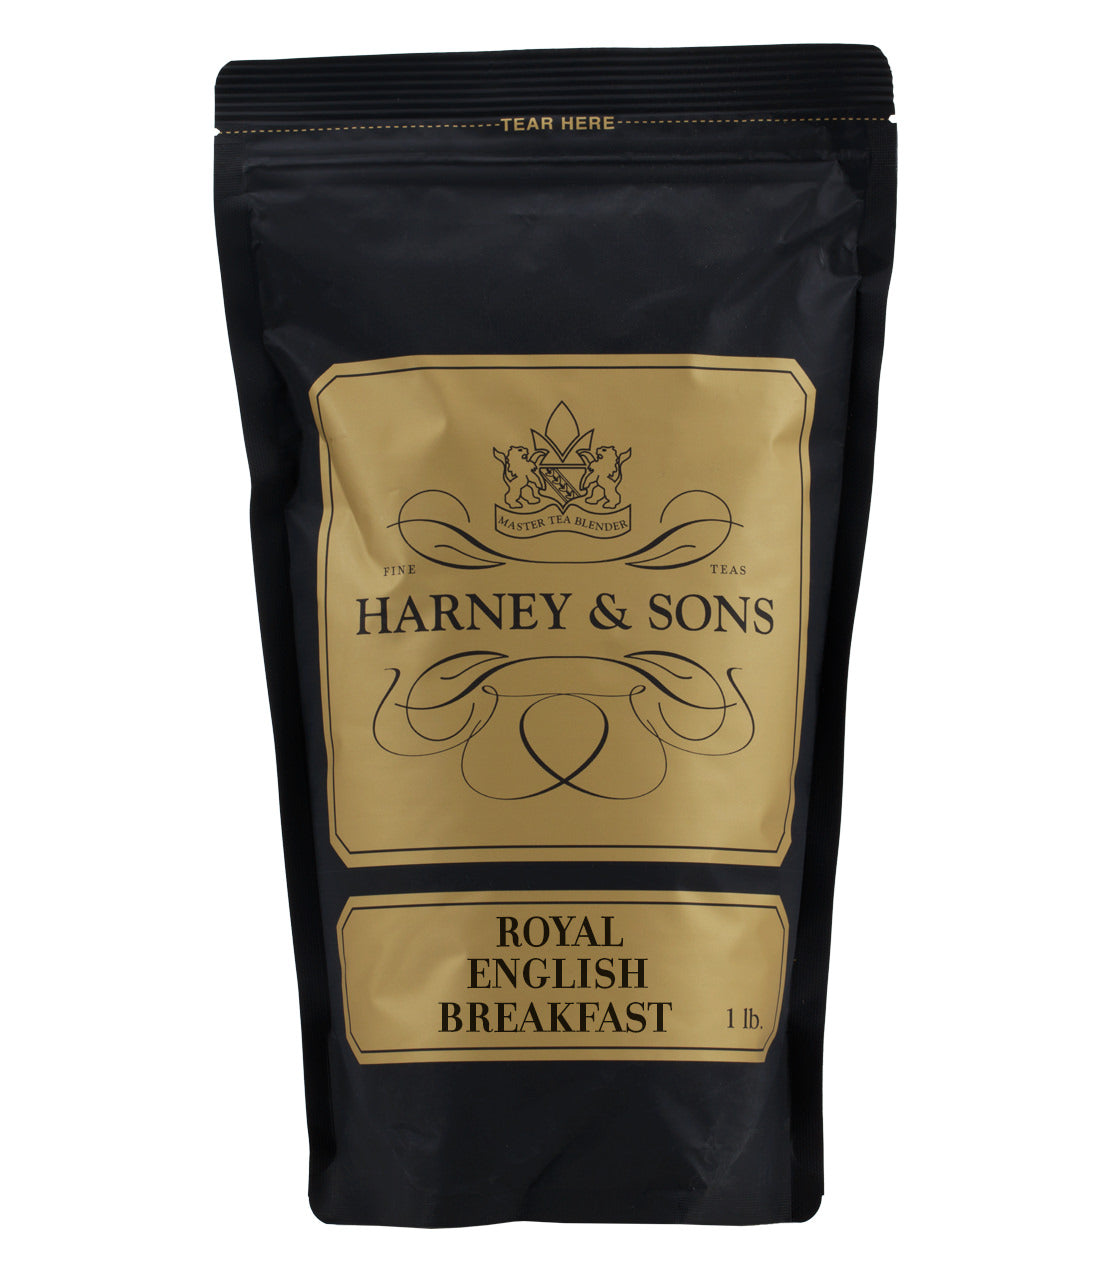 Royal English Breakfast - Loose 1 lb. Bag - Harney & Sons Fine Teas